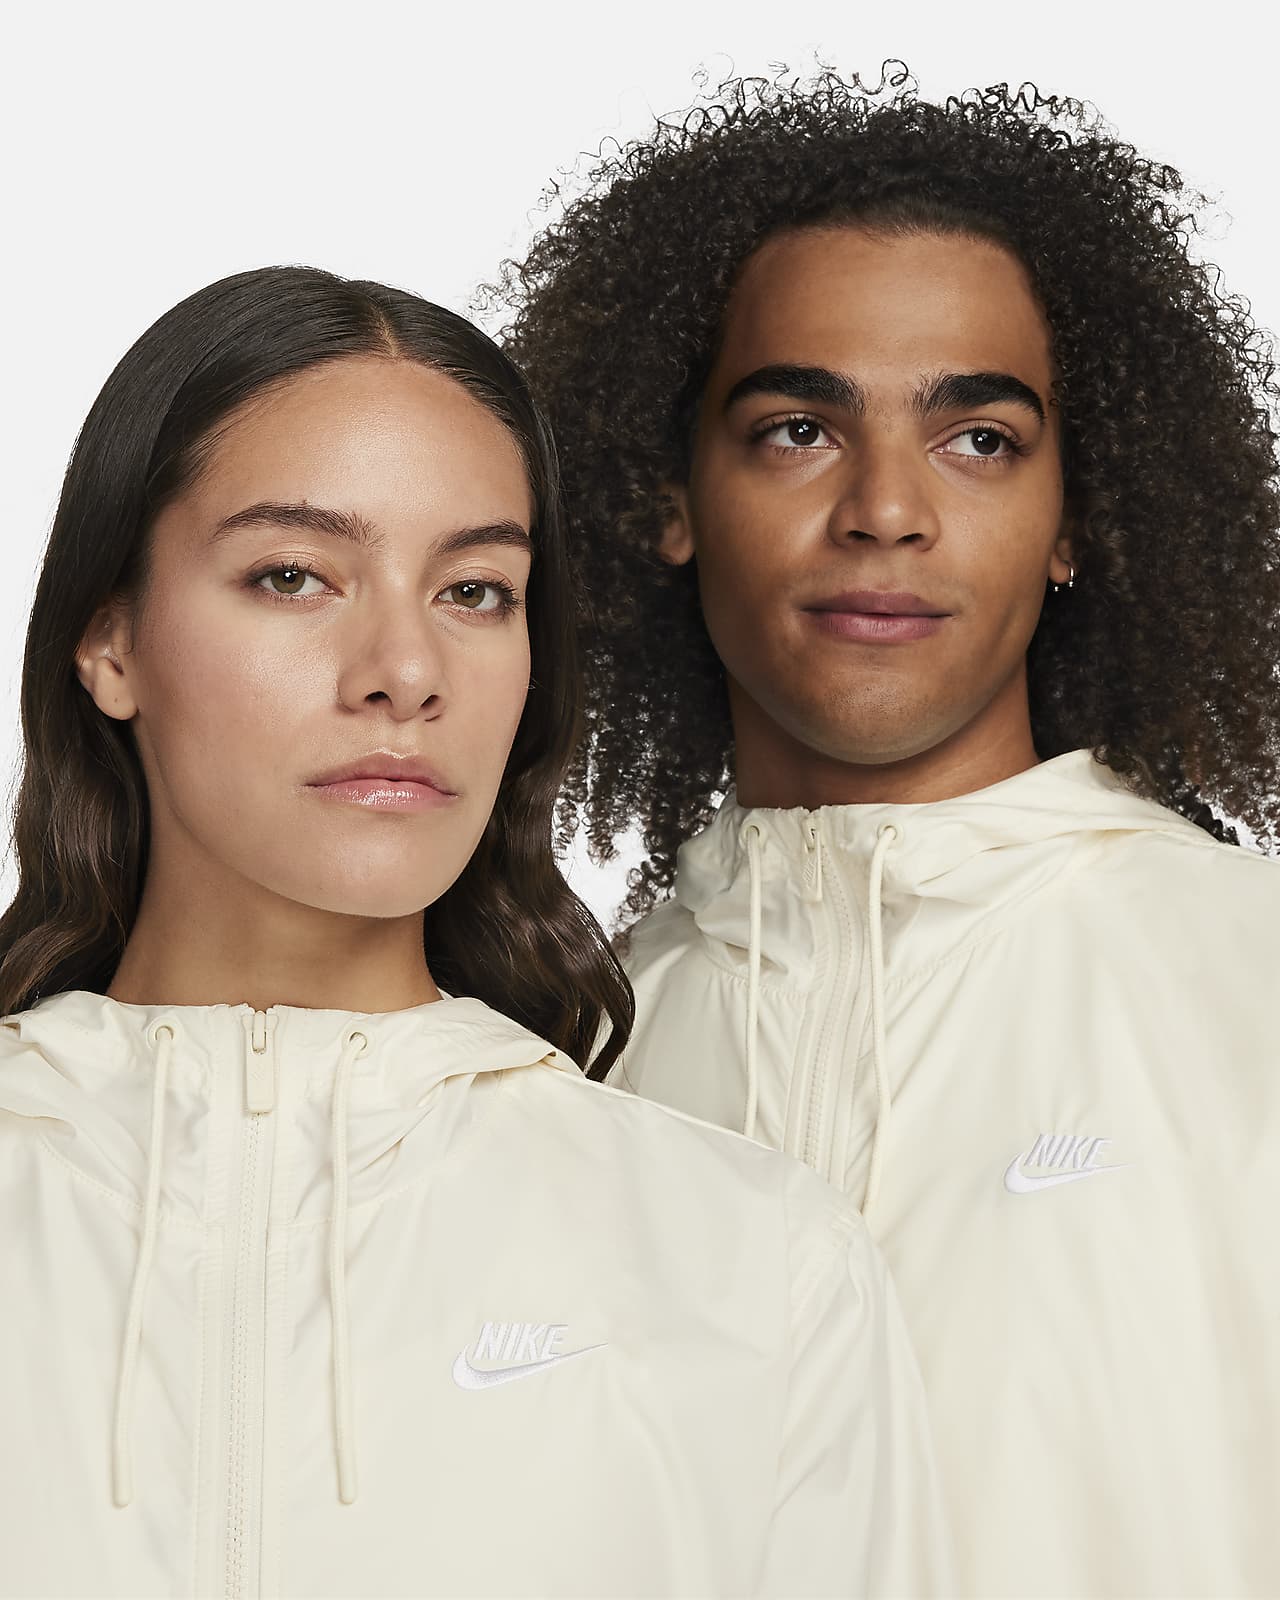 Nike Repel City Ready Women's Short-Sleeve Jacket.